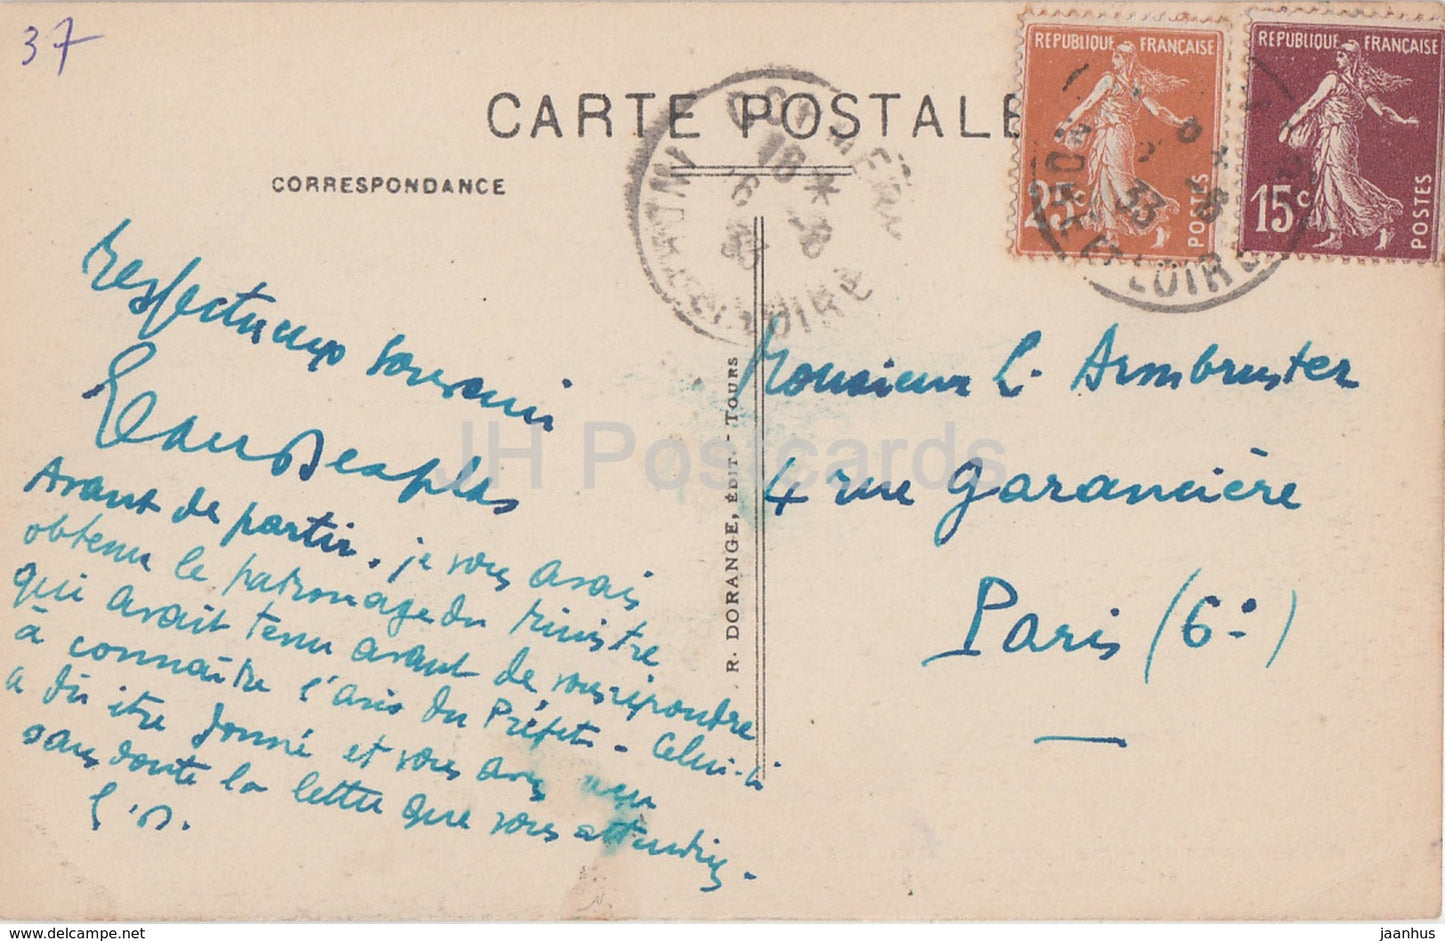 Loches - Le Donjon - Cachot ou fut enferme Ludovic Sforza - Schloss - 13 - alte Postkarte - 1933 - Frankreich - gebraucht